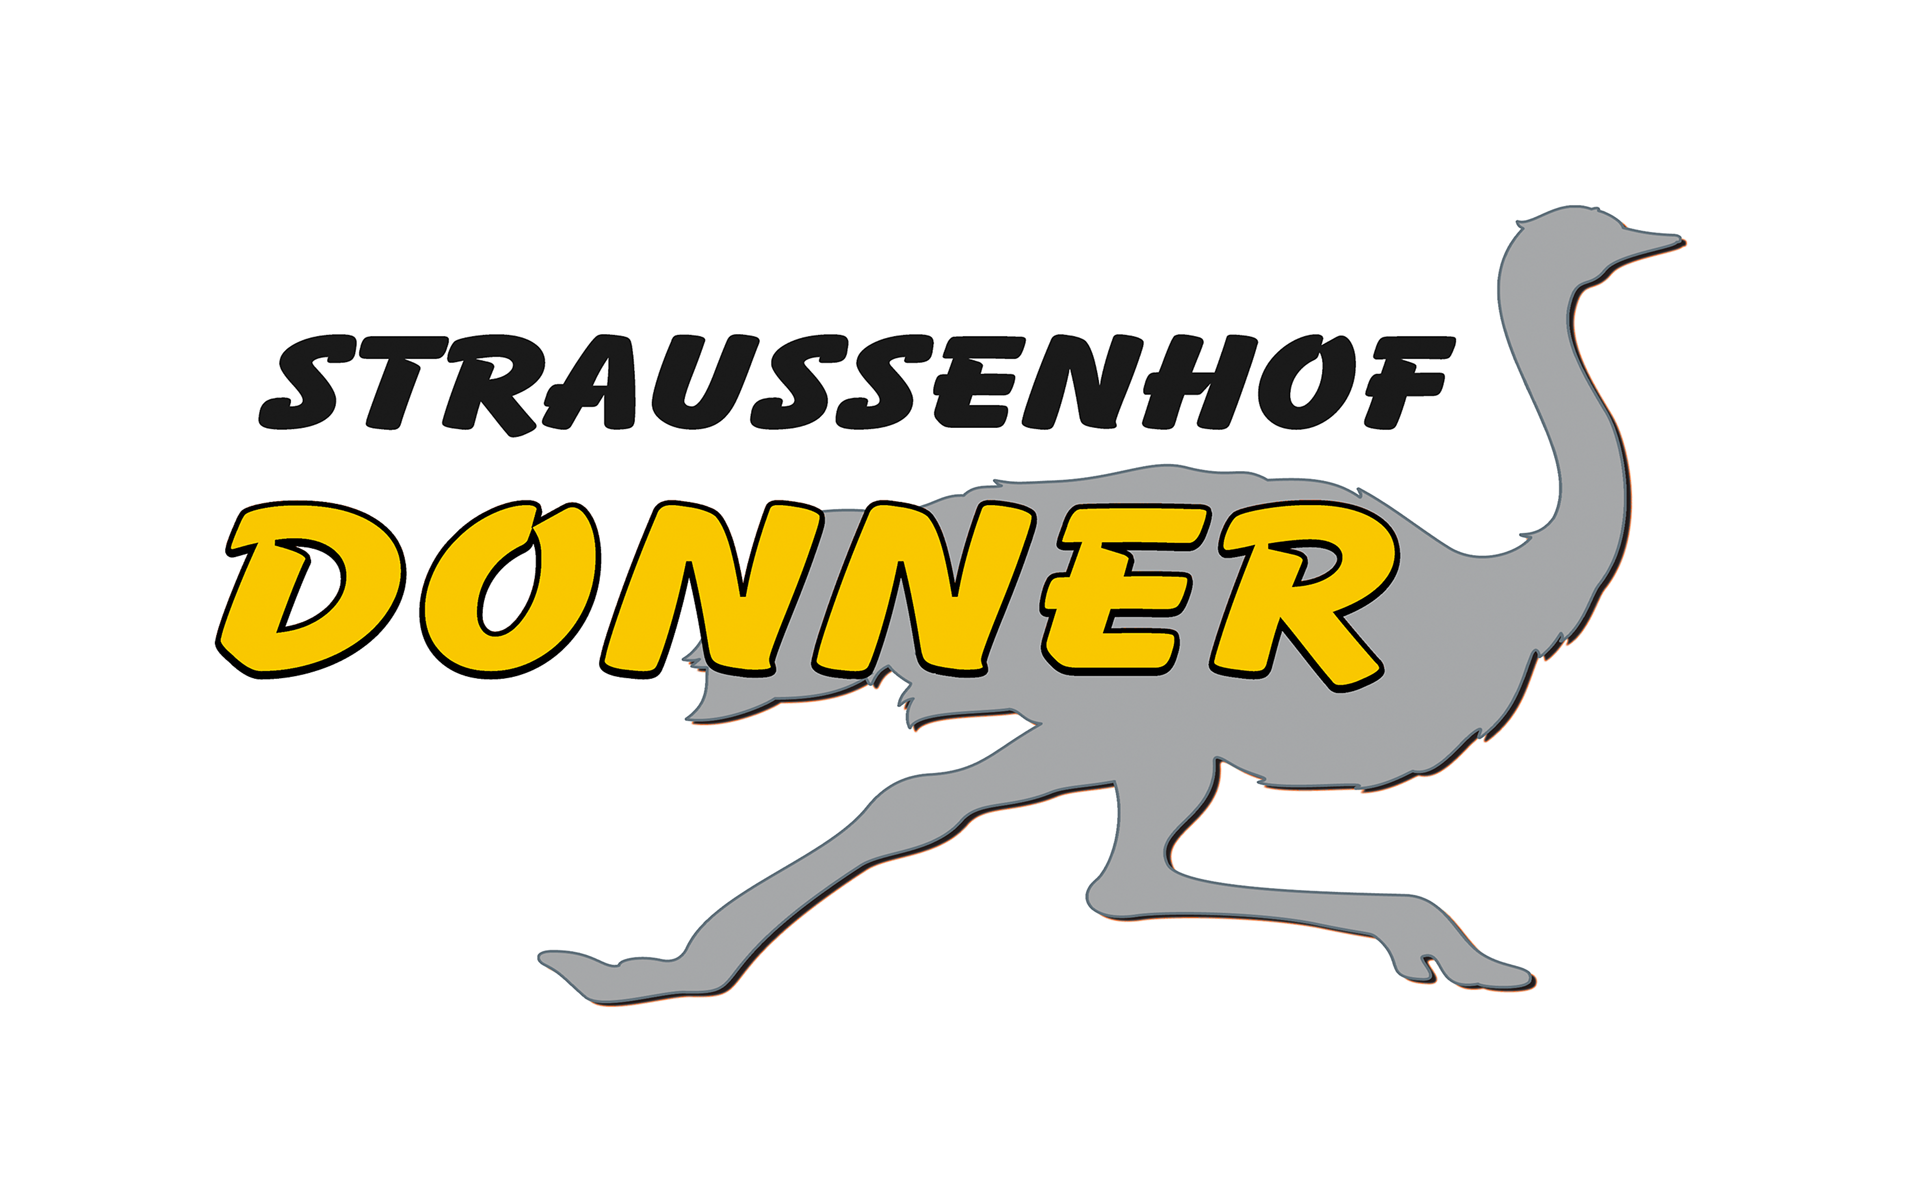 Straussenhof Donner